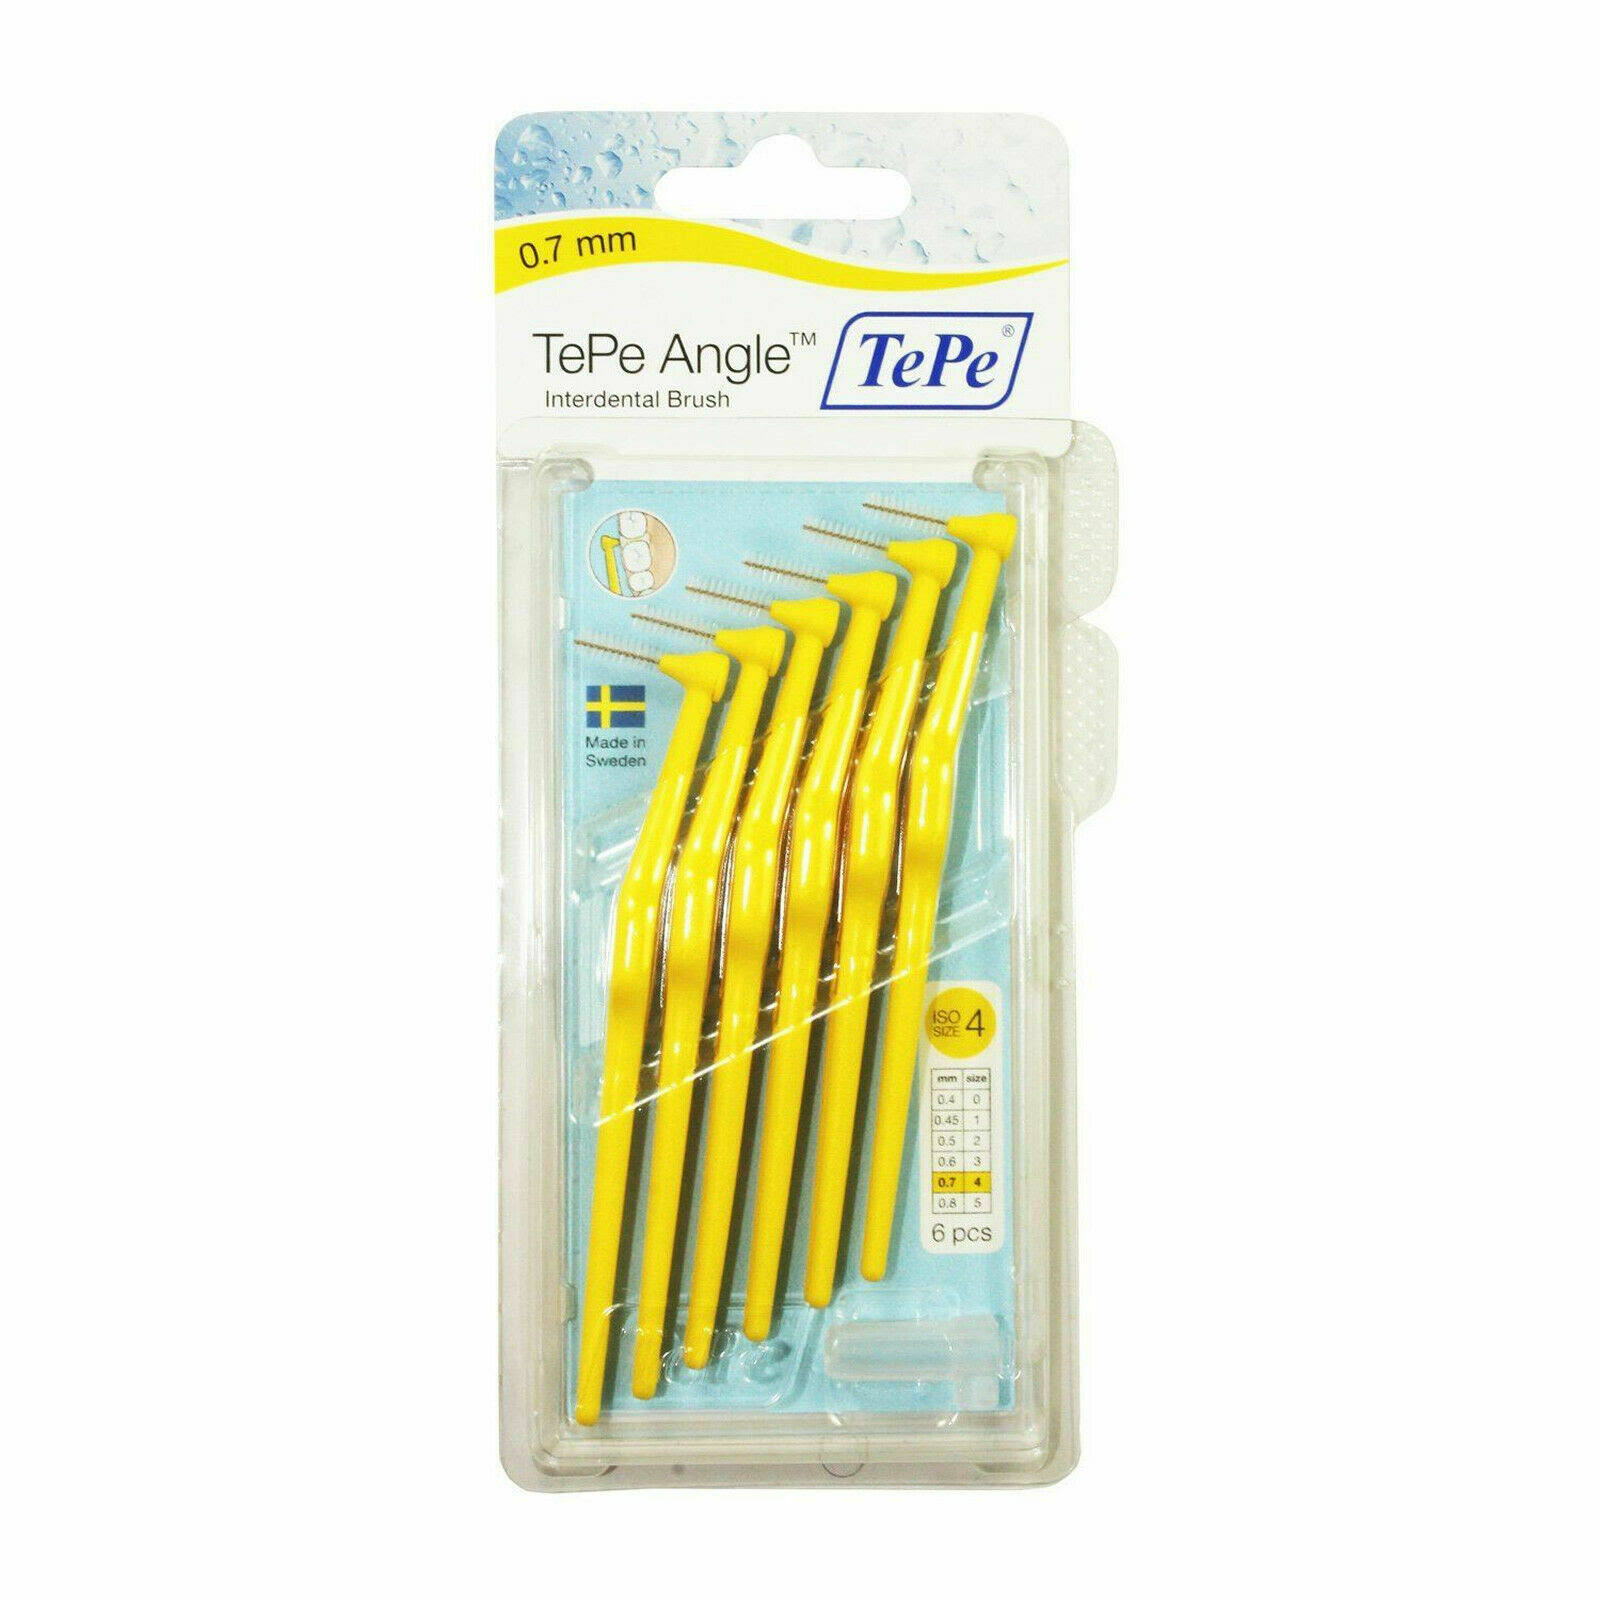 Tepe Angle Interdental Brush - 0.7mm, Yellow, Pack Of 6